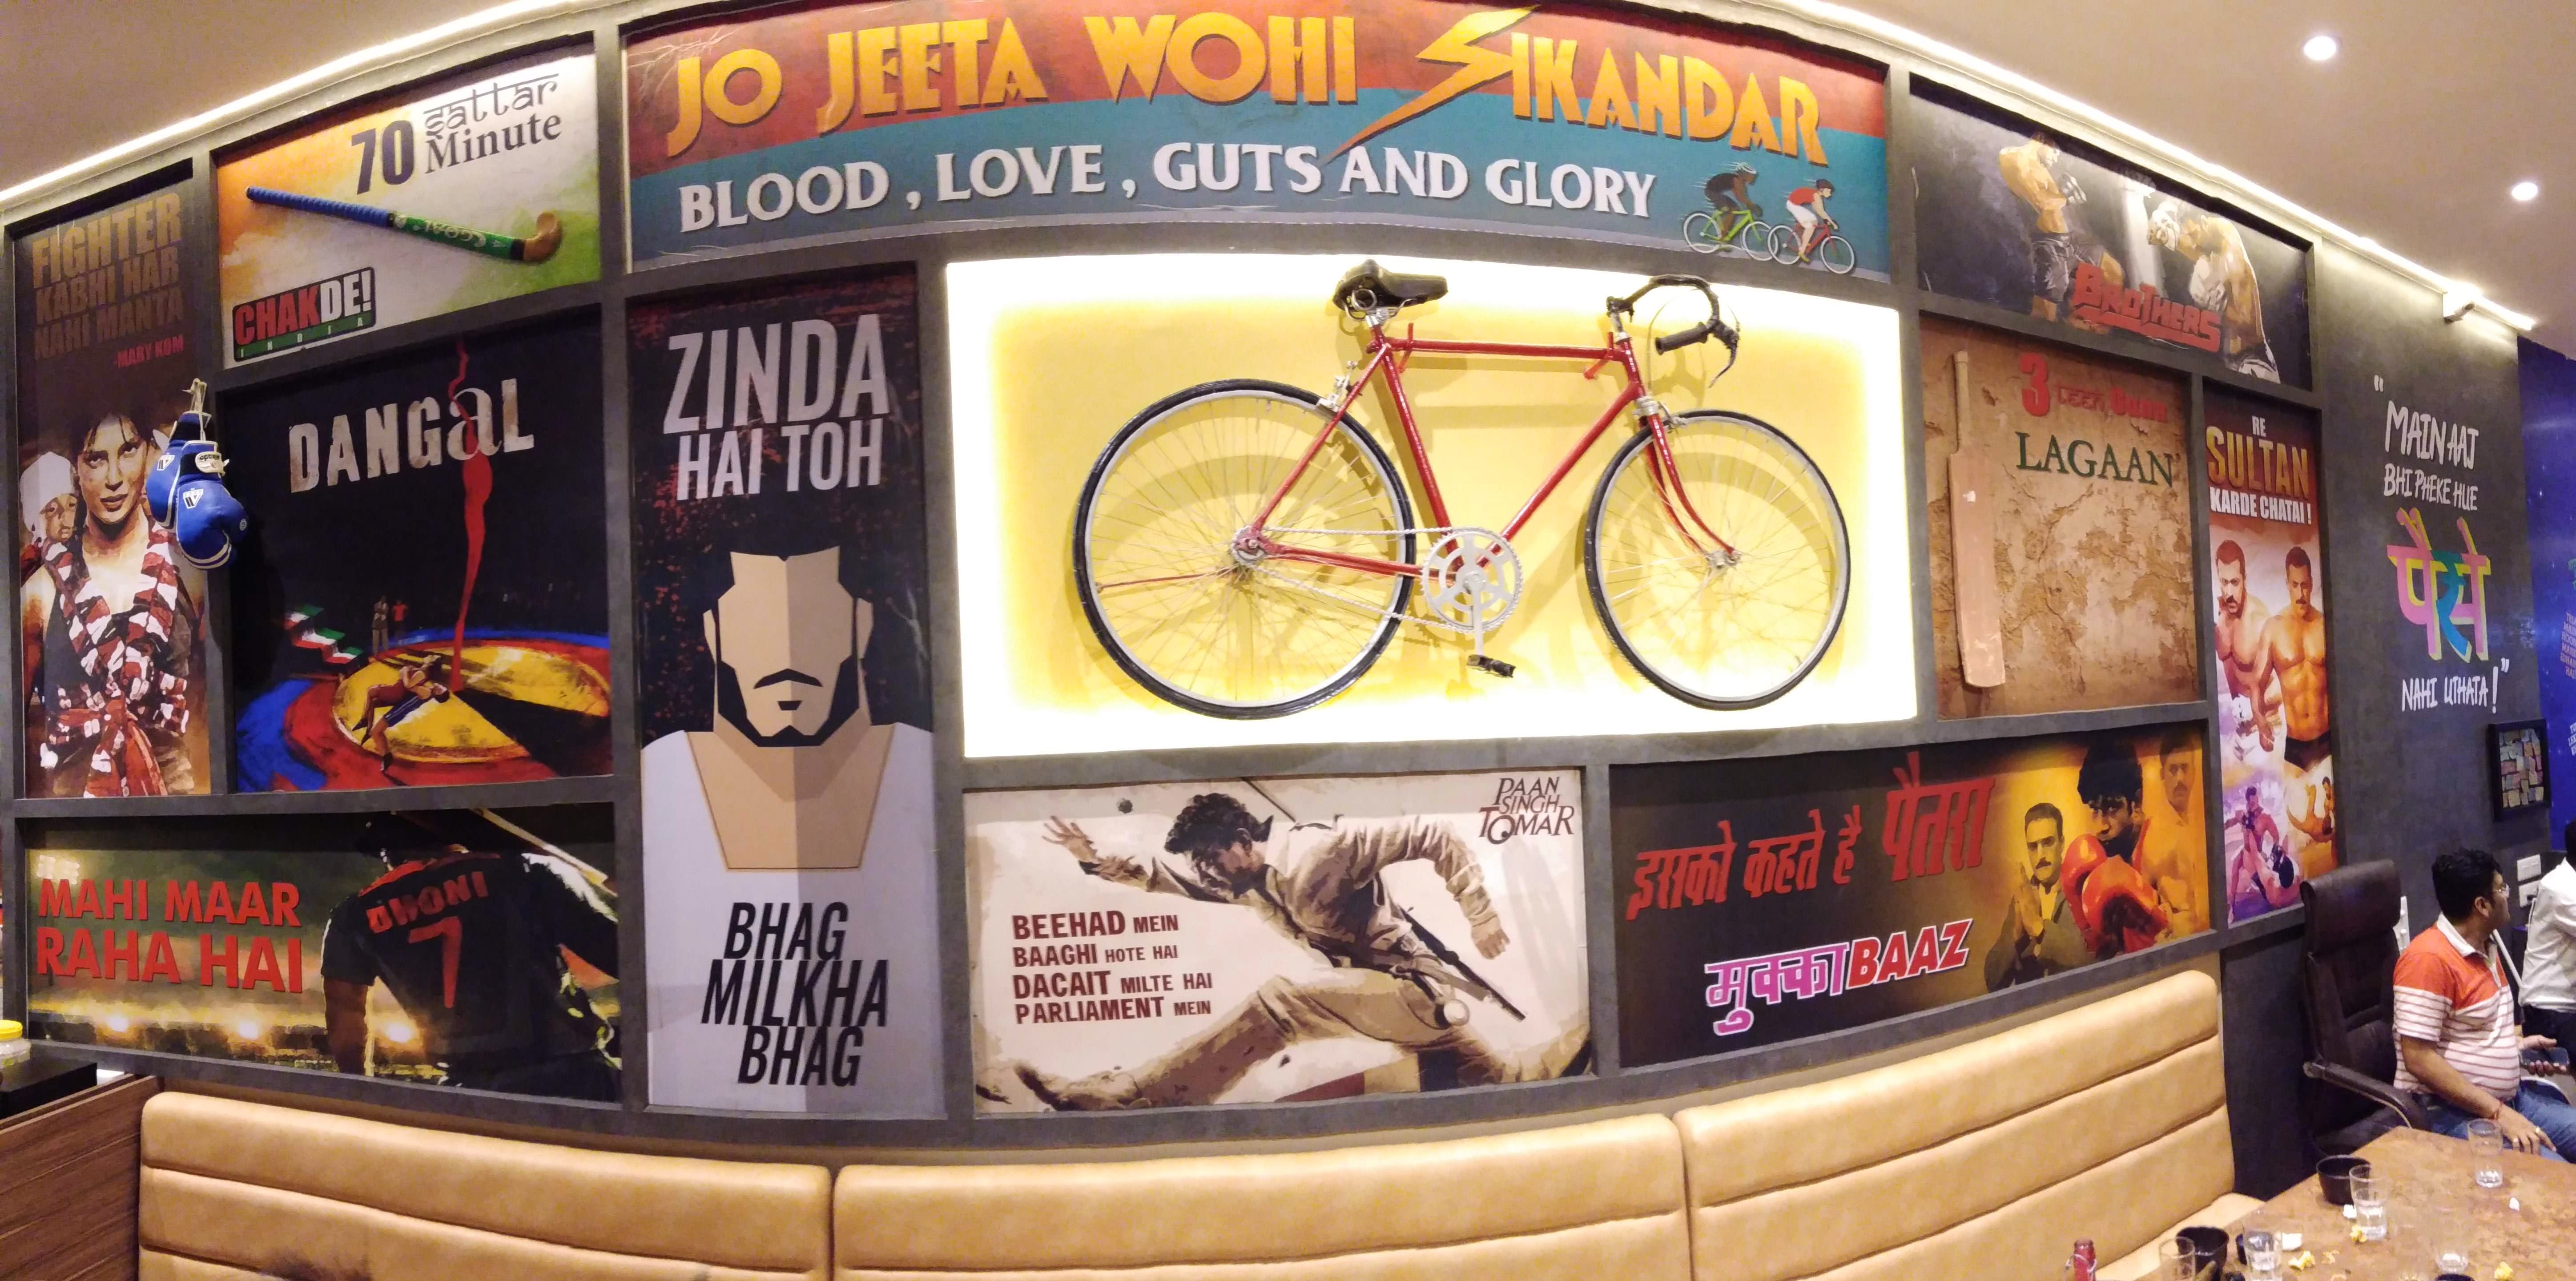 Vehicle,Bicycle,Poster,Advertising,Bmx bike,Photography,Bicycle motocross,Bicycle wheel